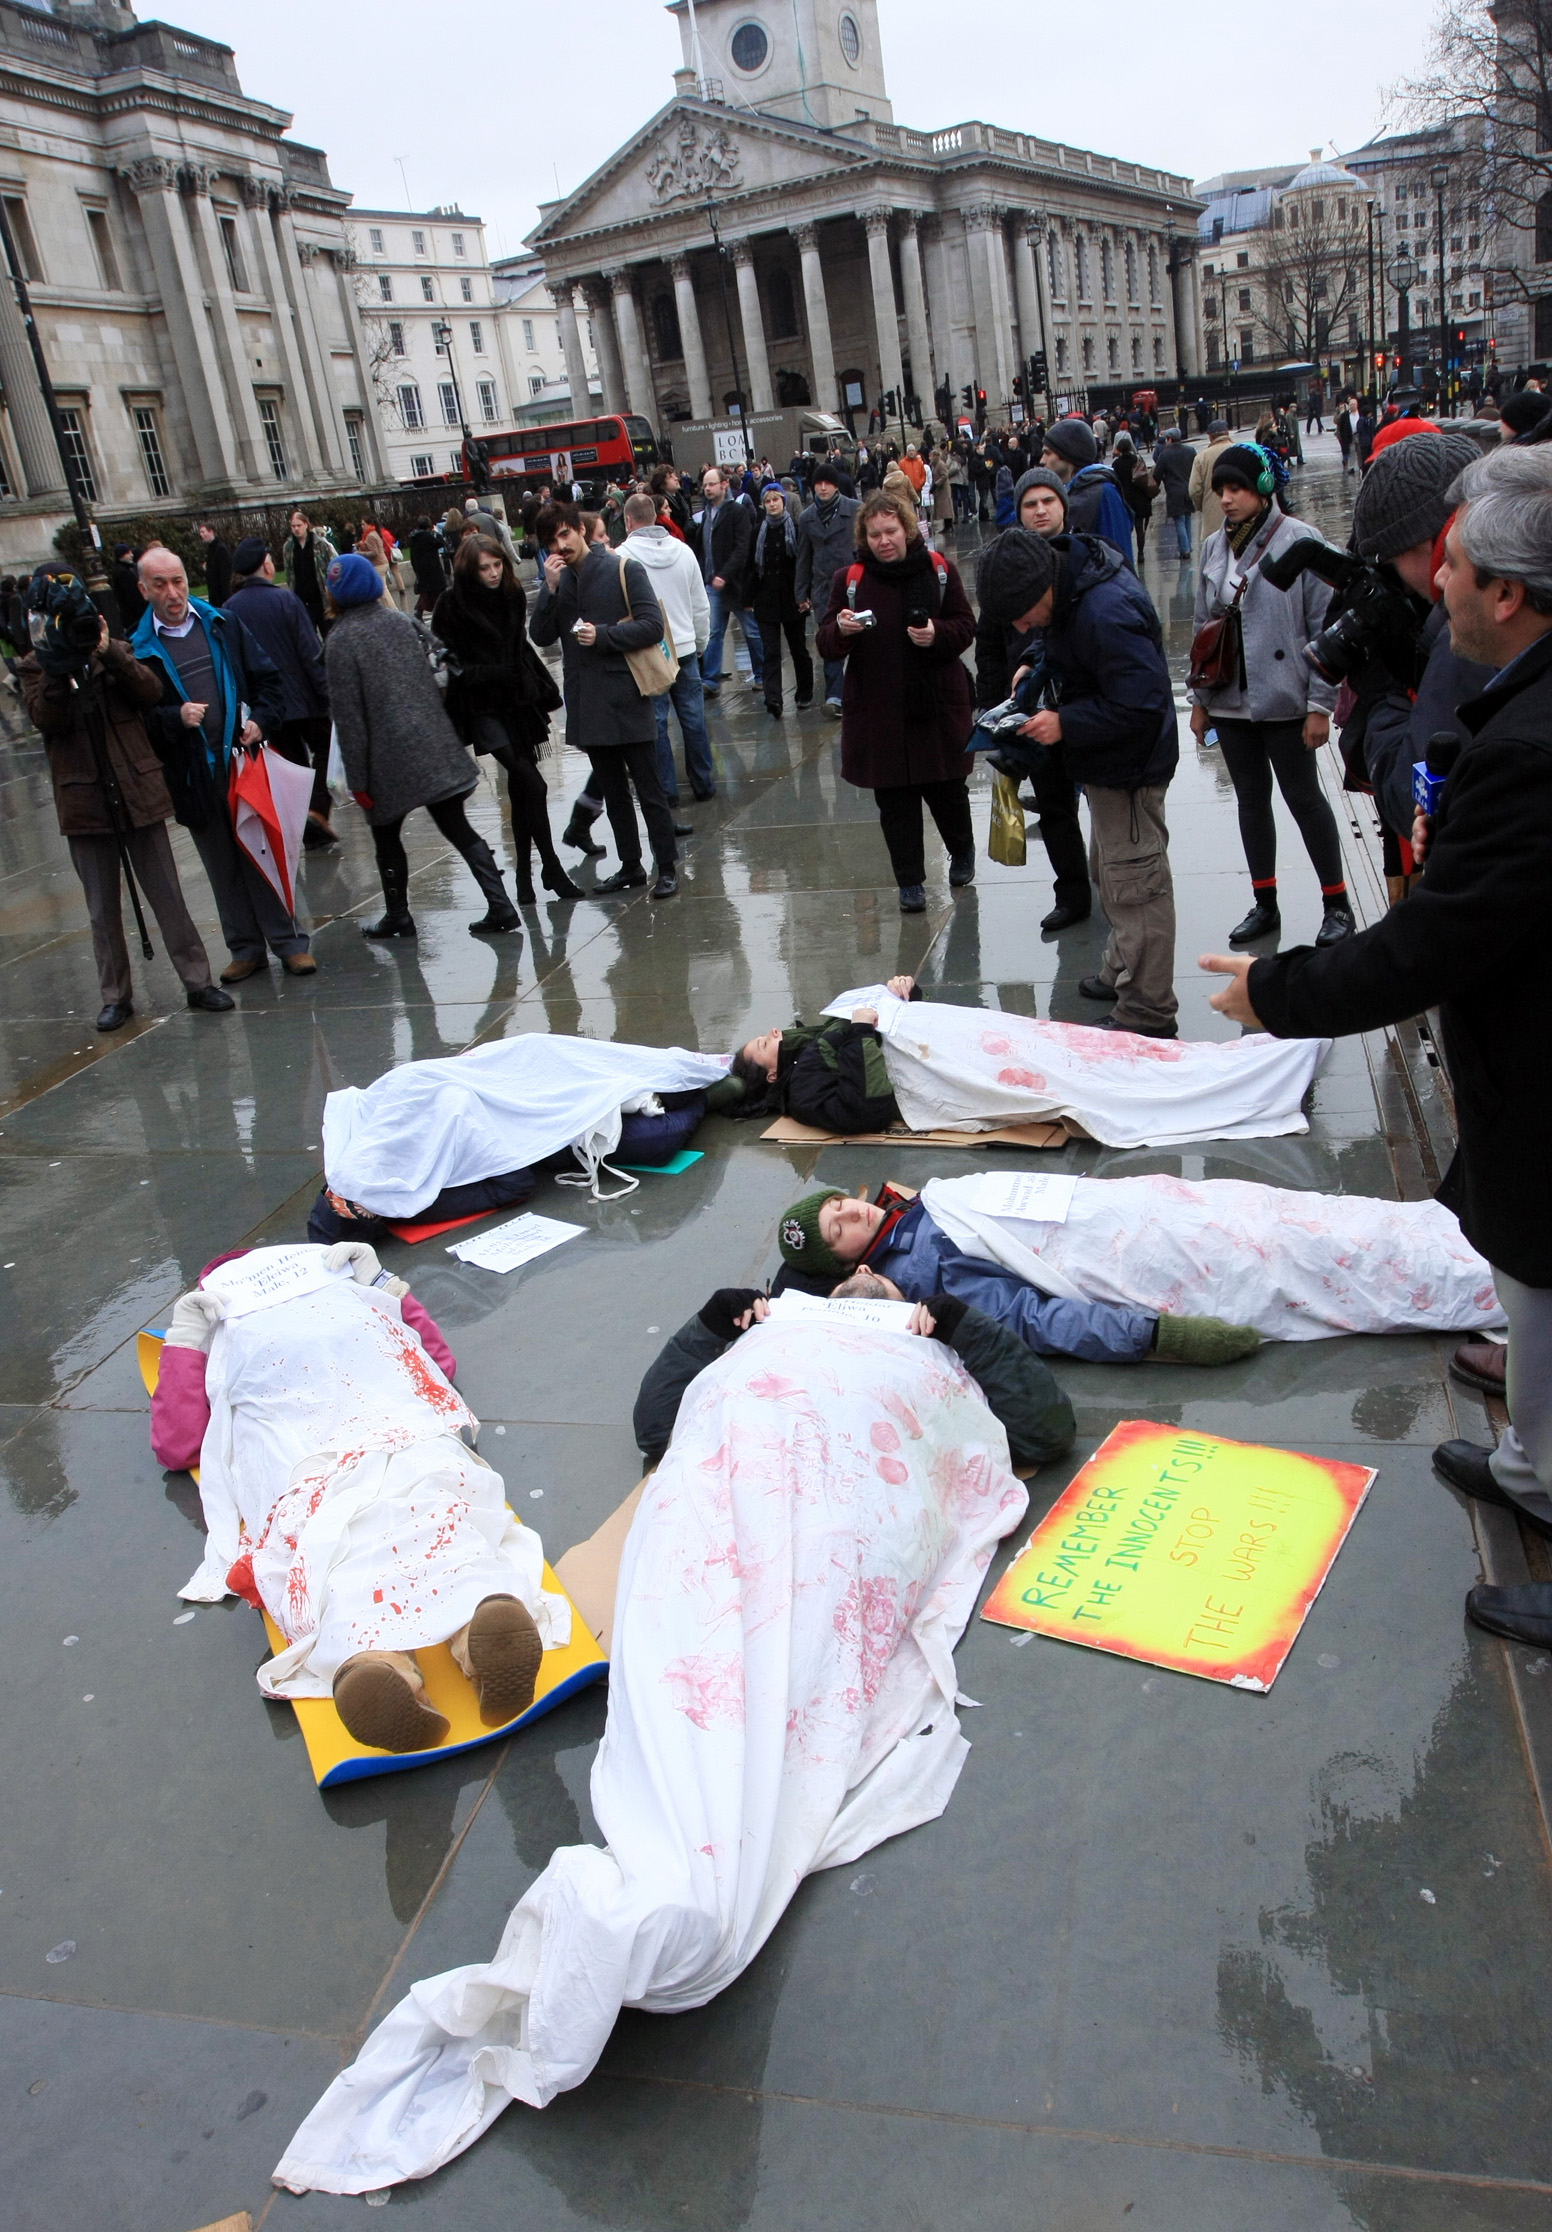 Palestinian supporters held a 'die-in' in Trafalgar Square